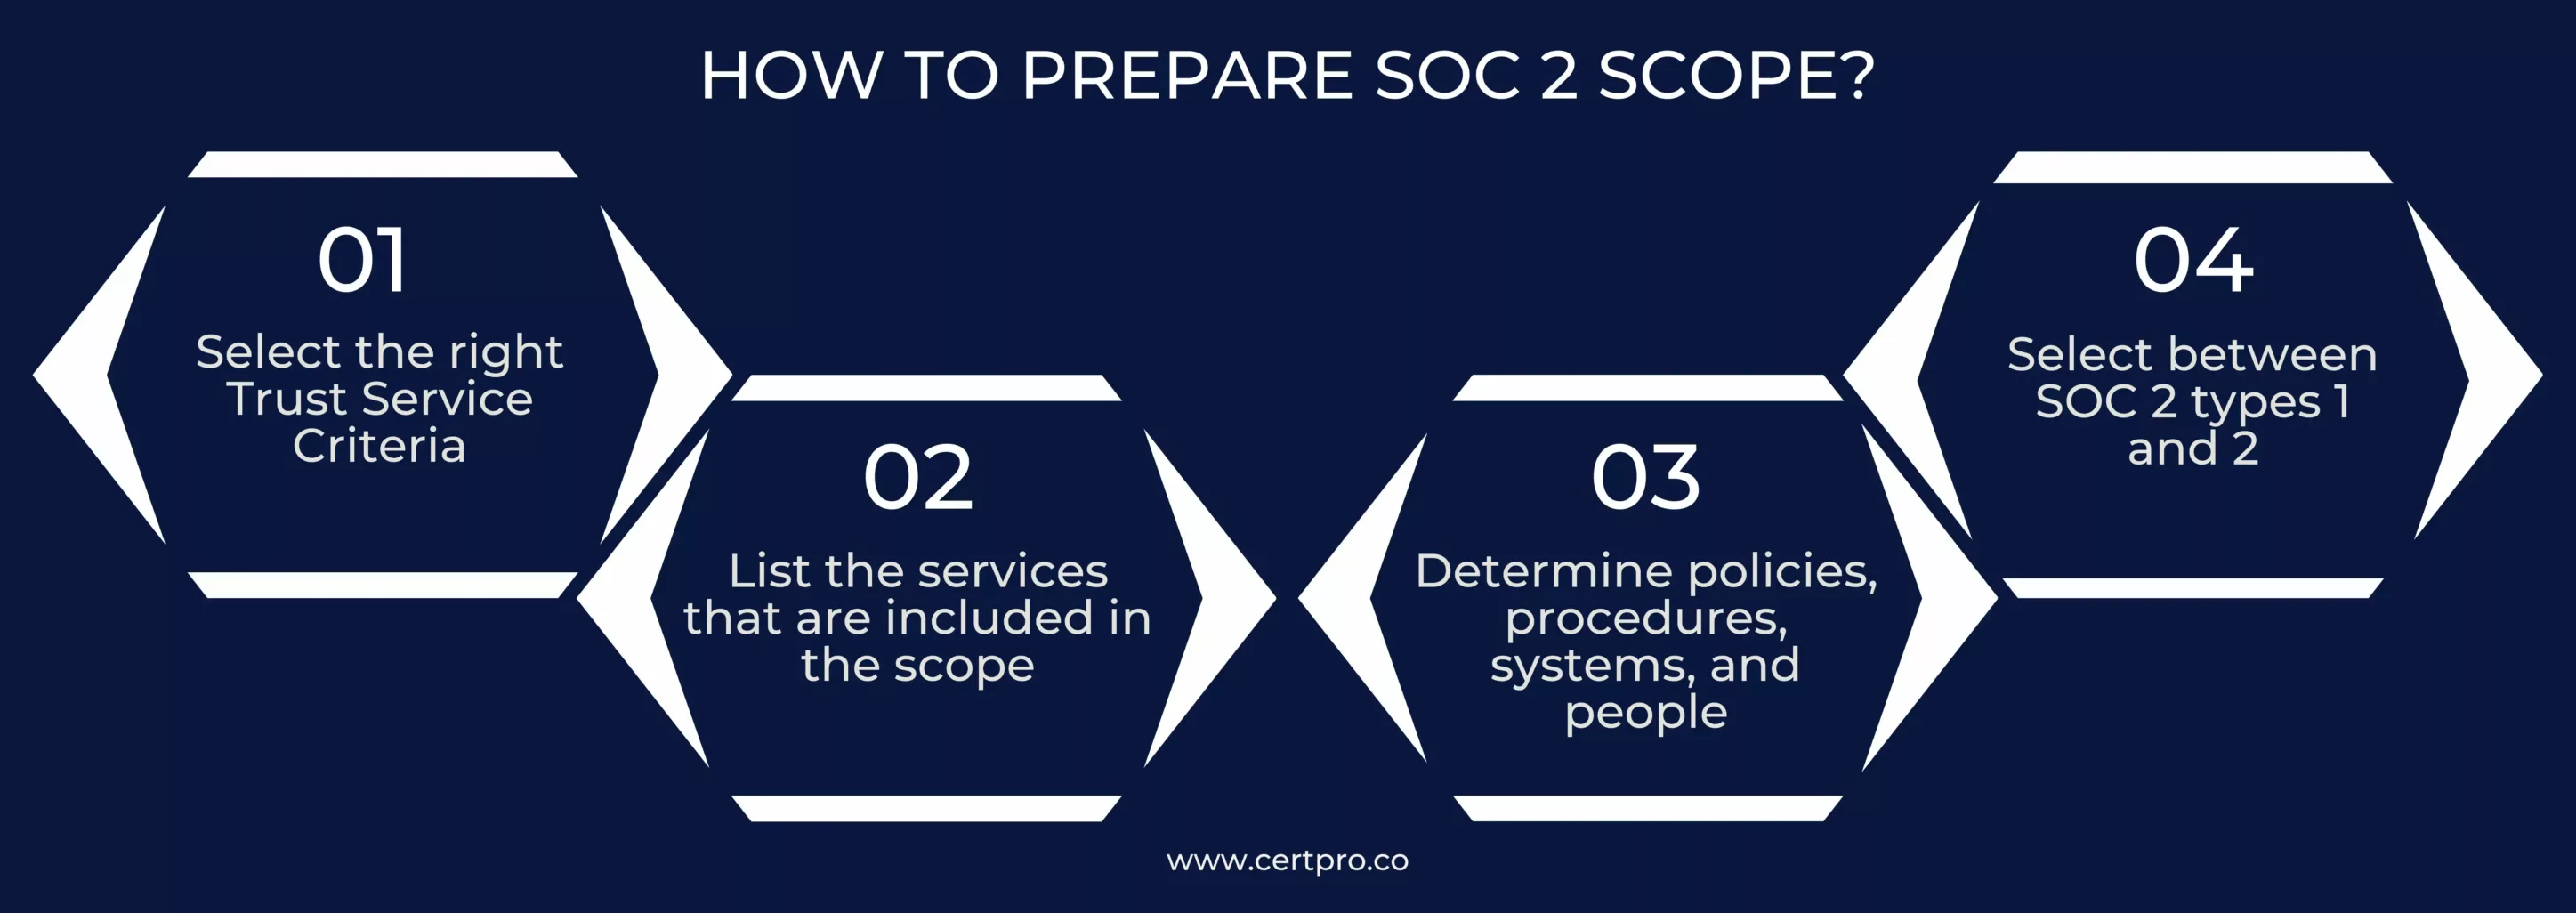 HOW TO PREPARE SOC 2 SCOPE